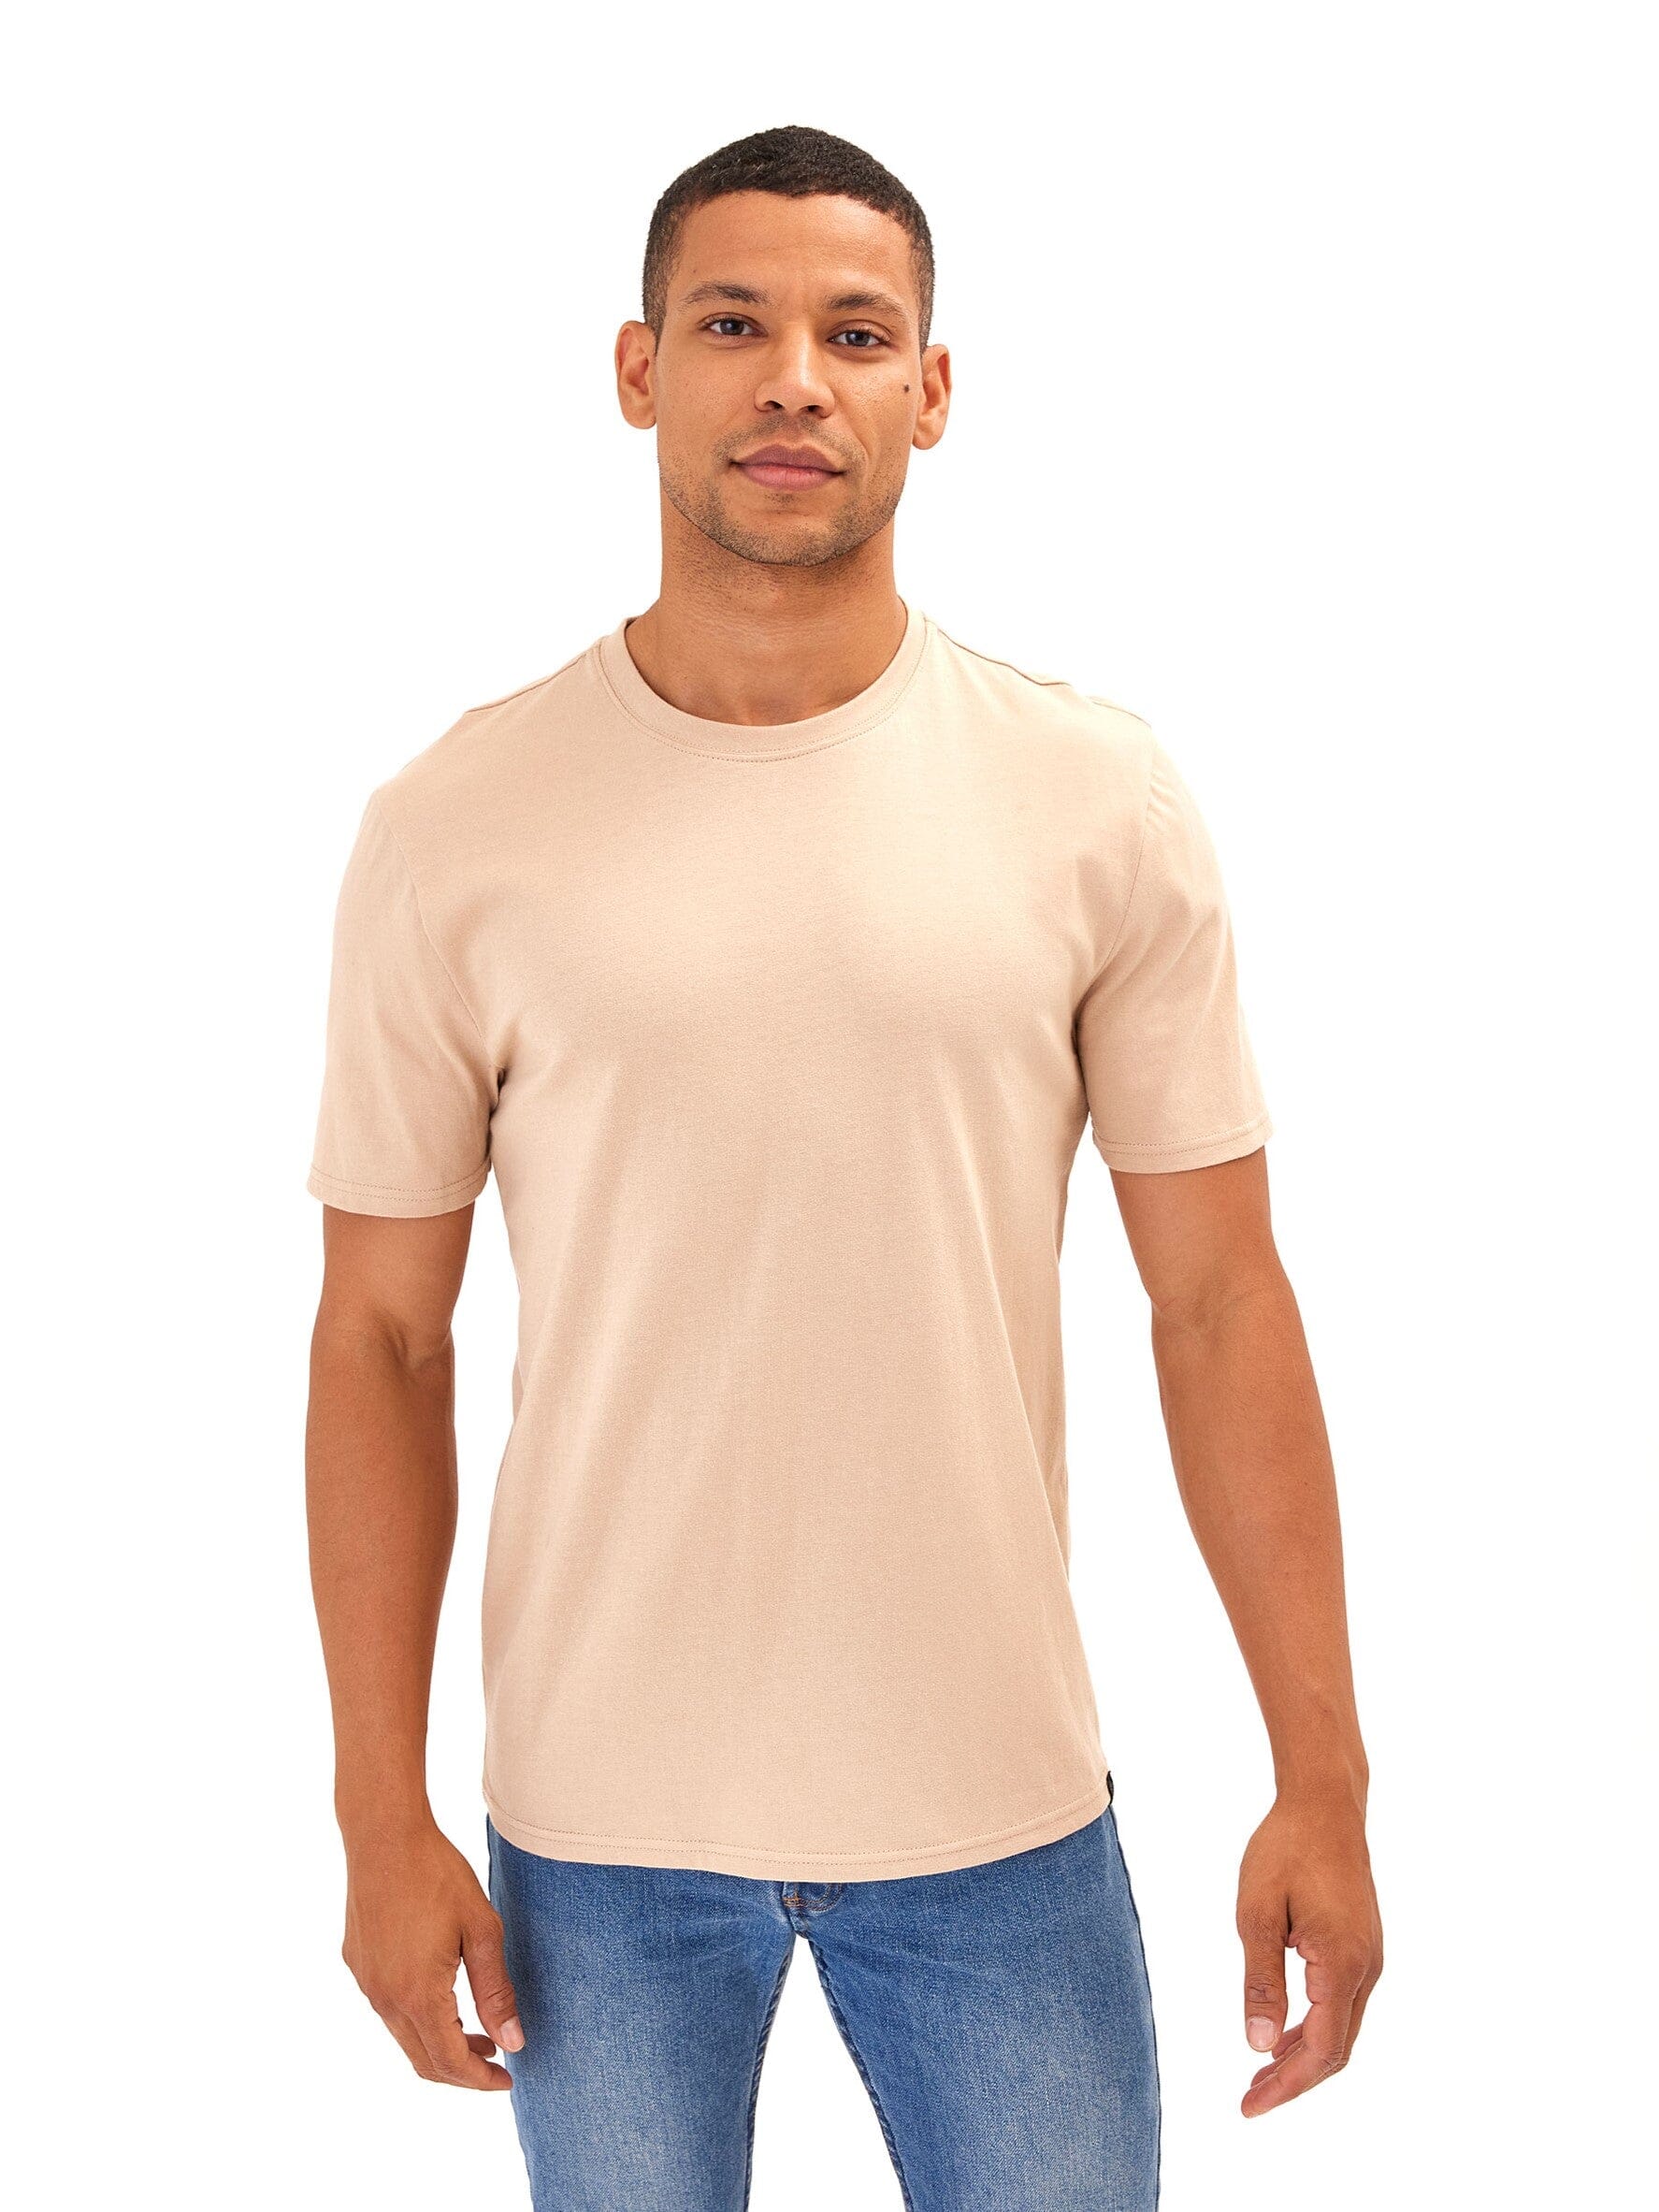 Gravity Threads Mens Totally 80s Short-Sleeve T-Shirt - Veg4U